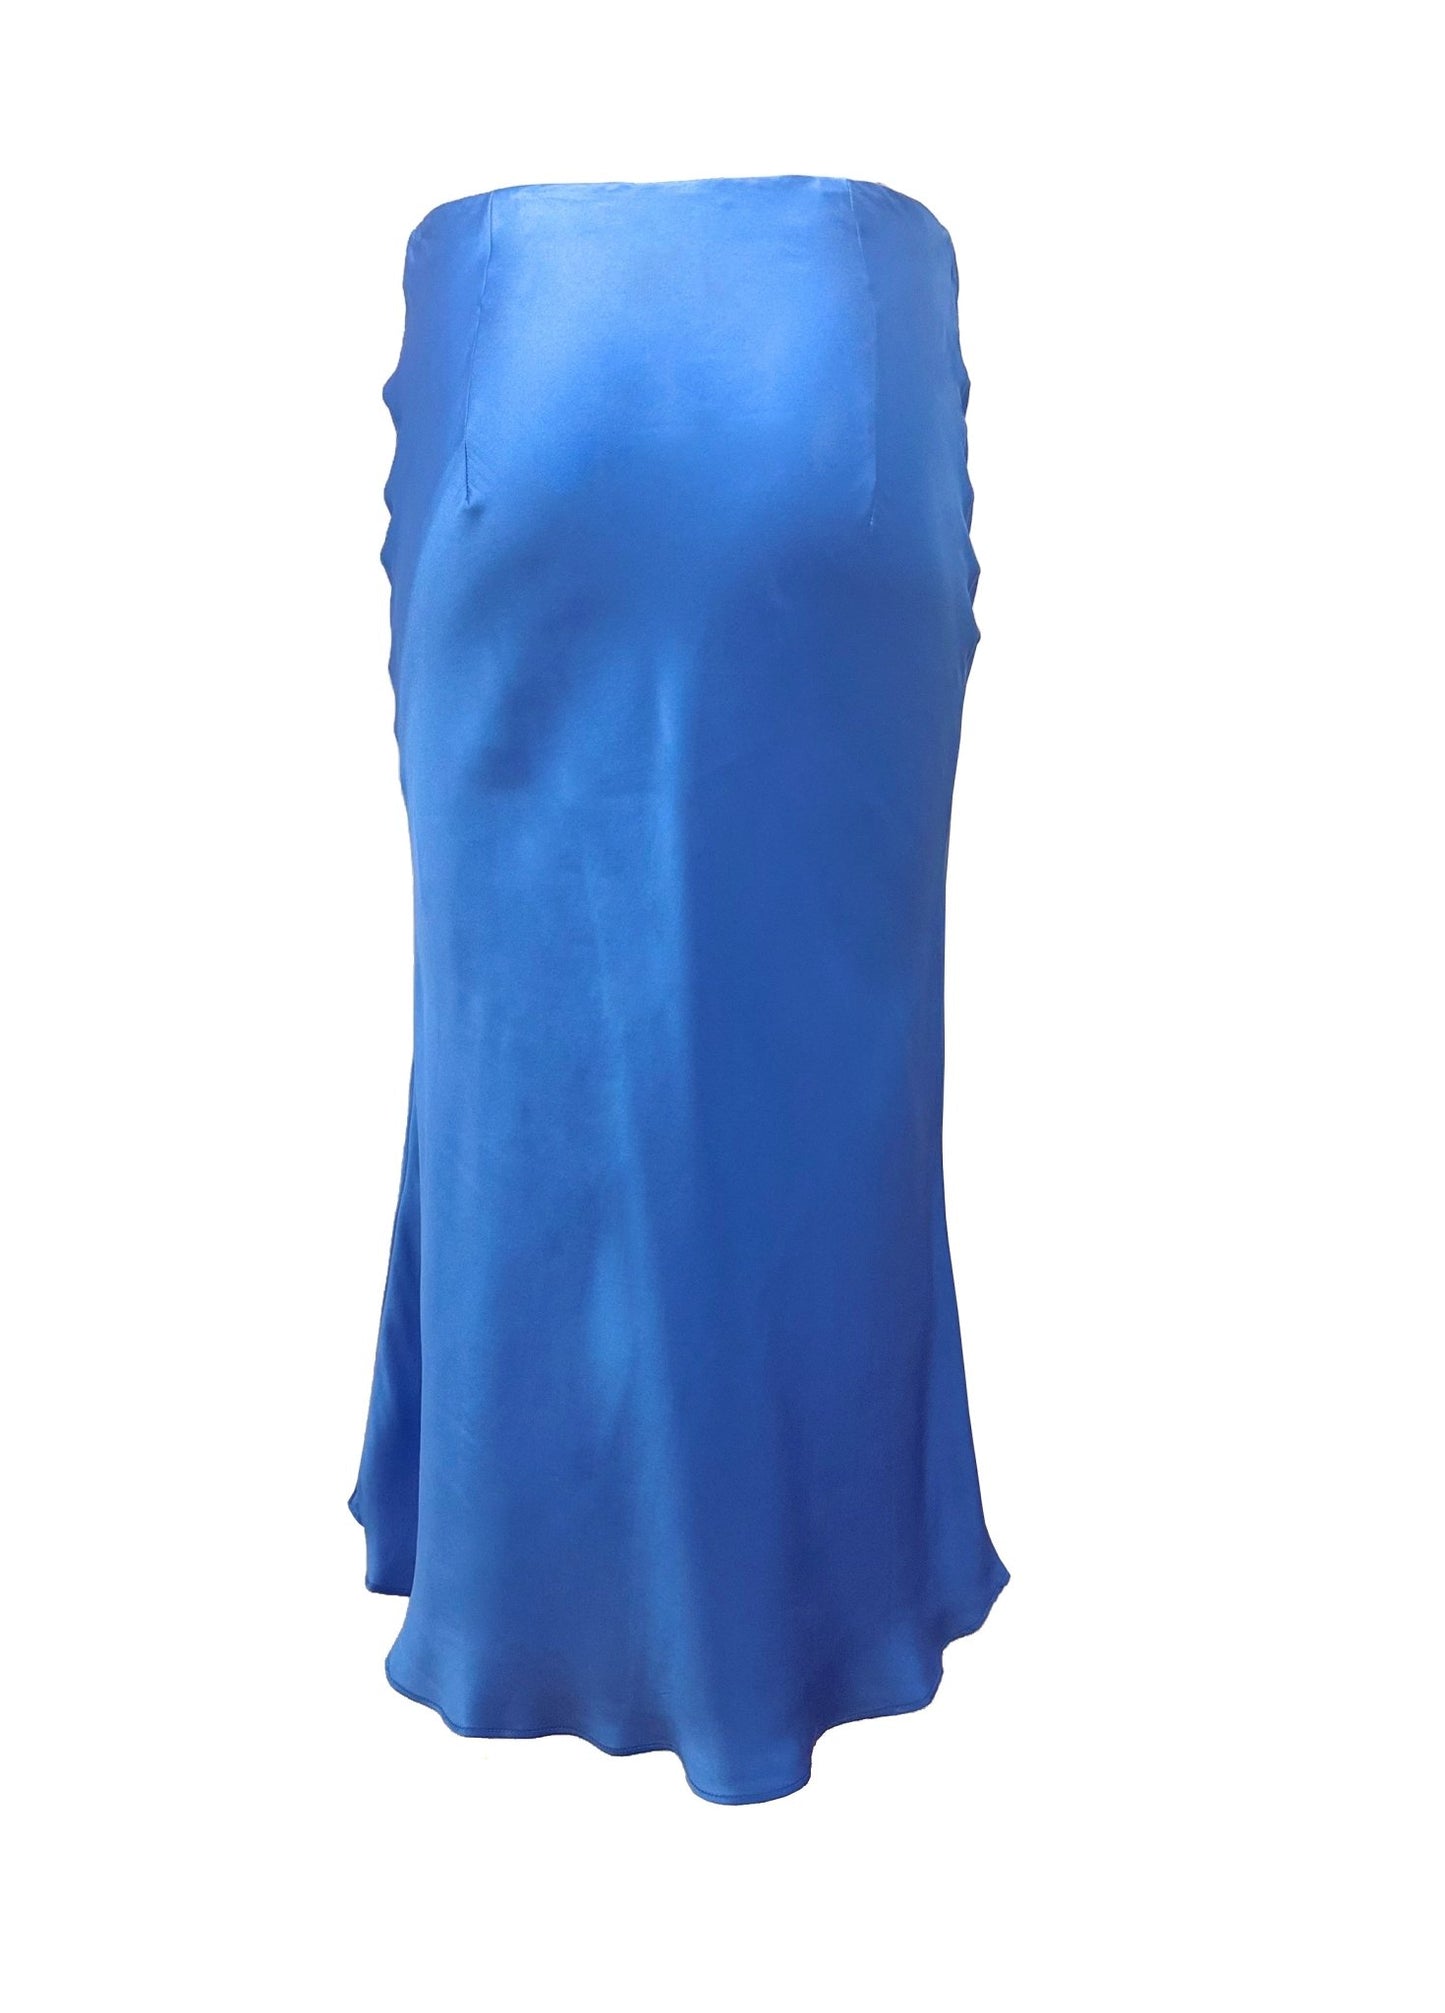 LeDoré Bias Skirt - Azure Silk - Sweepstake Winners™